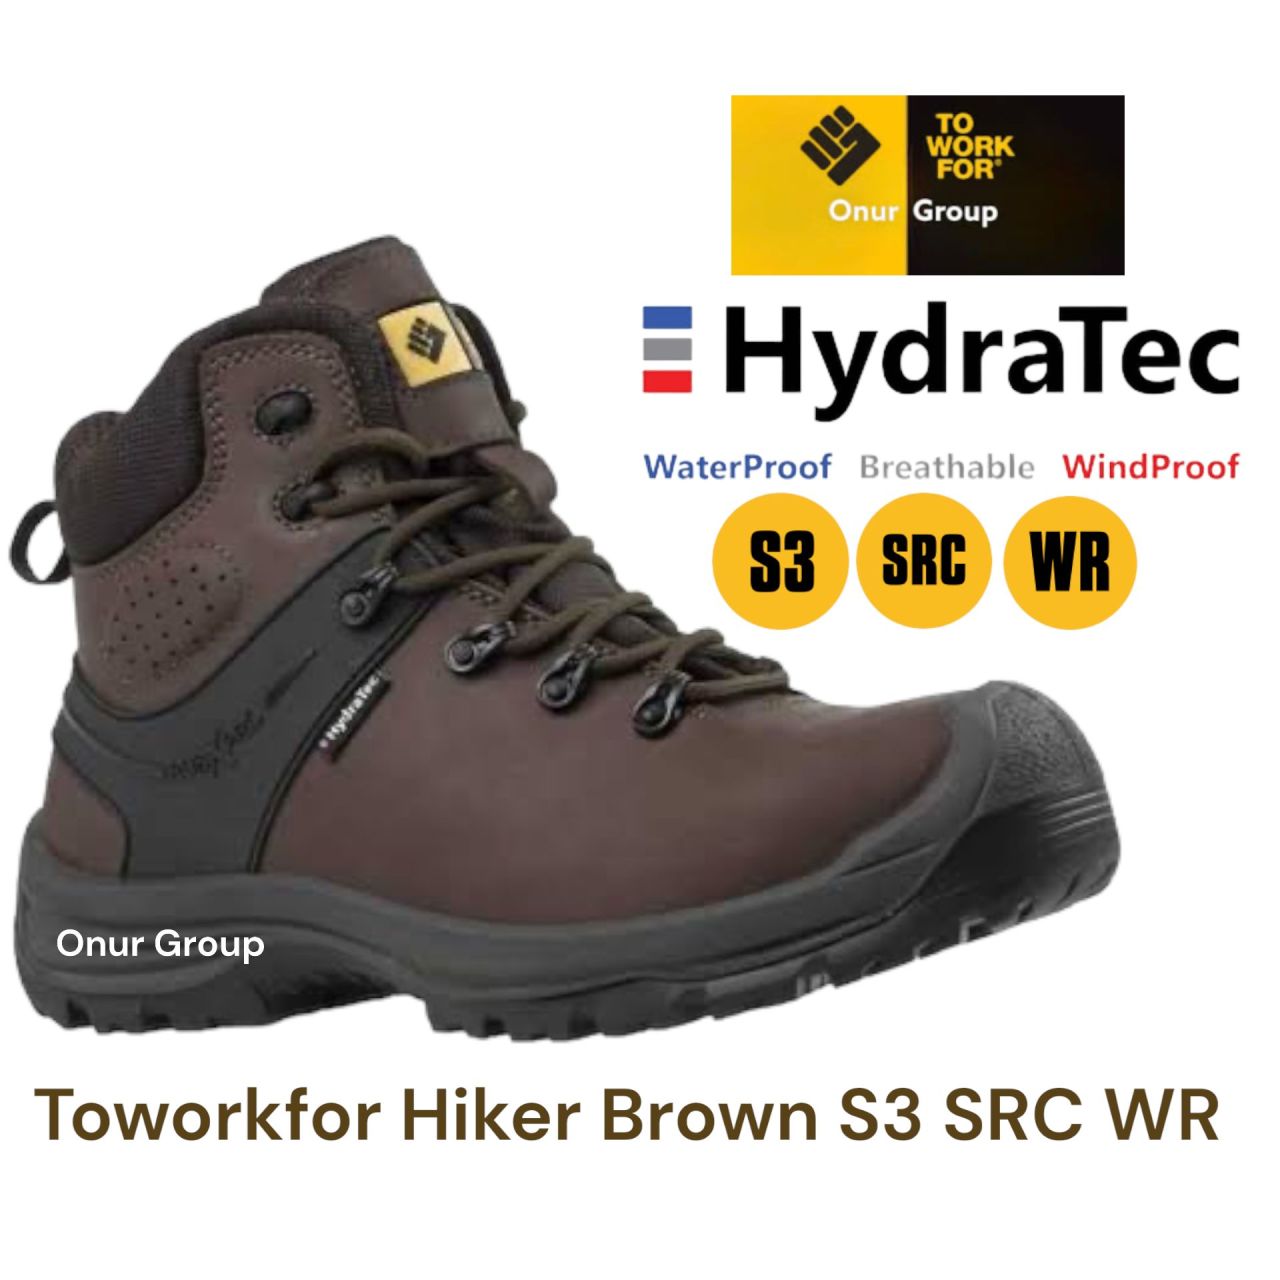 Toworkfor Hiker Brown S3 SRC WRU